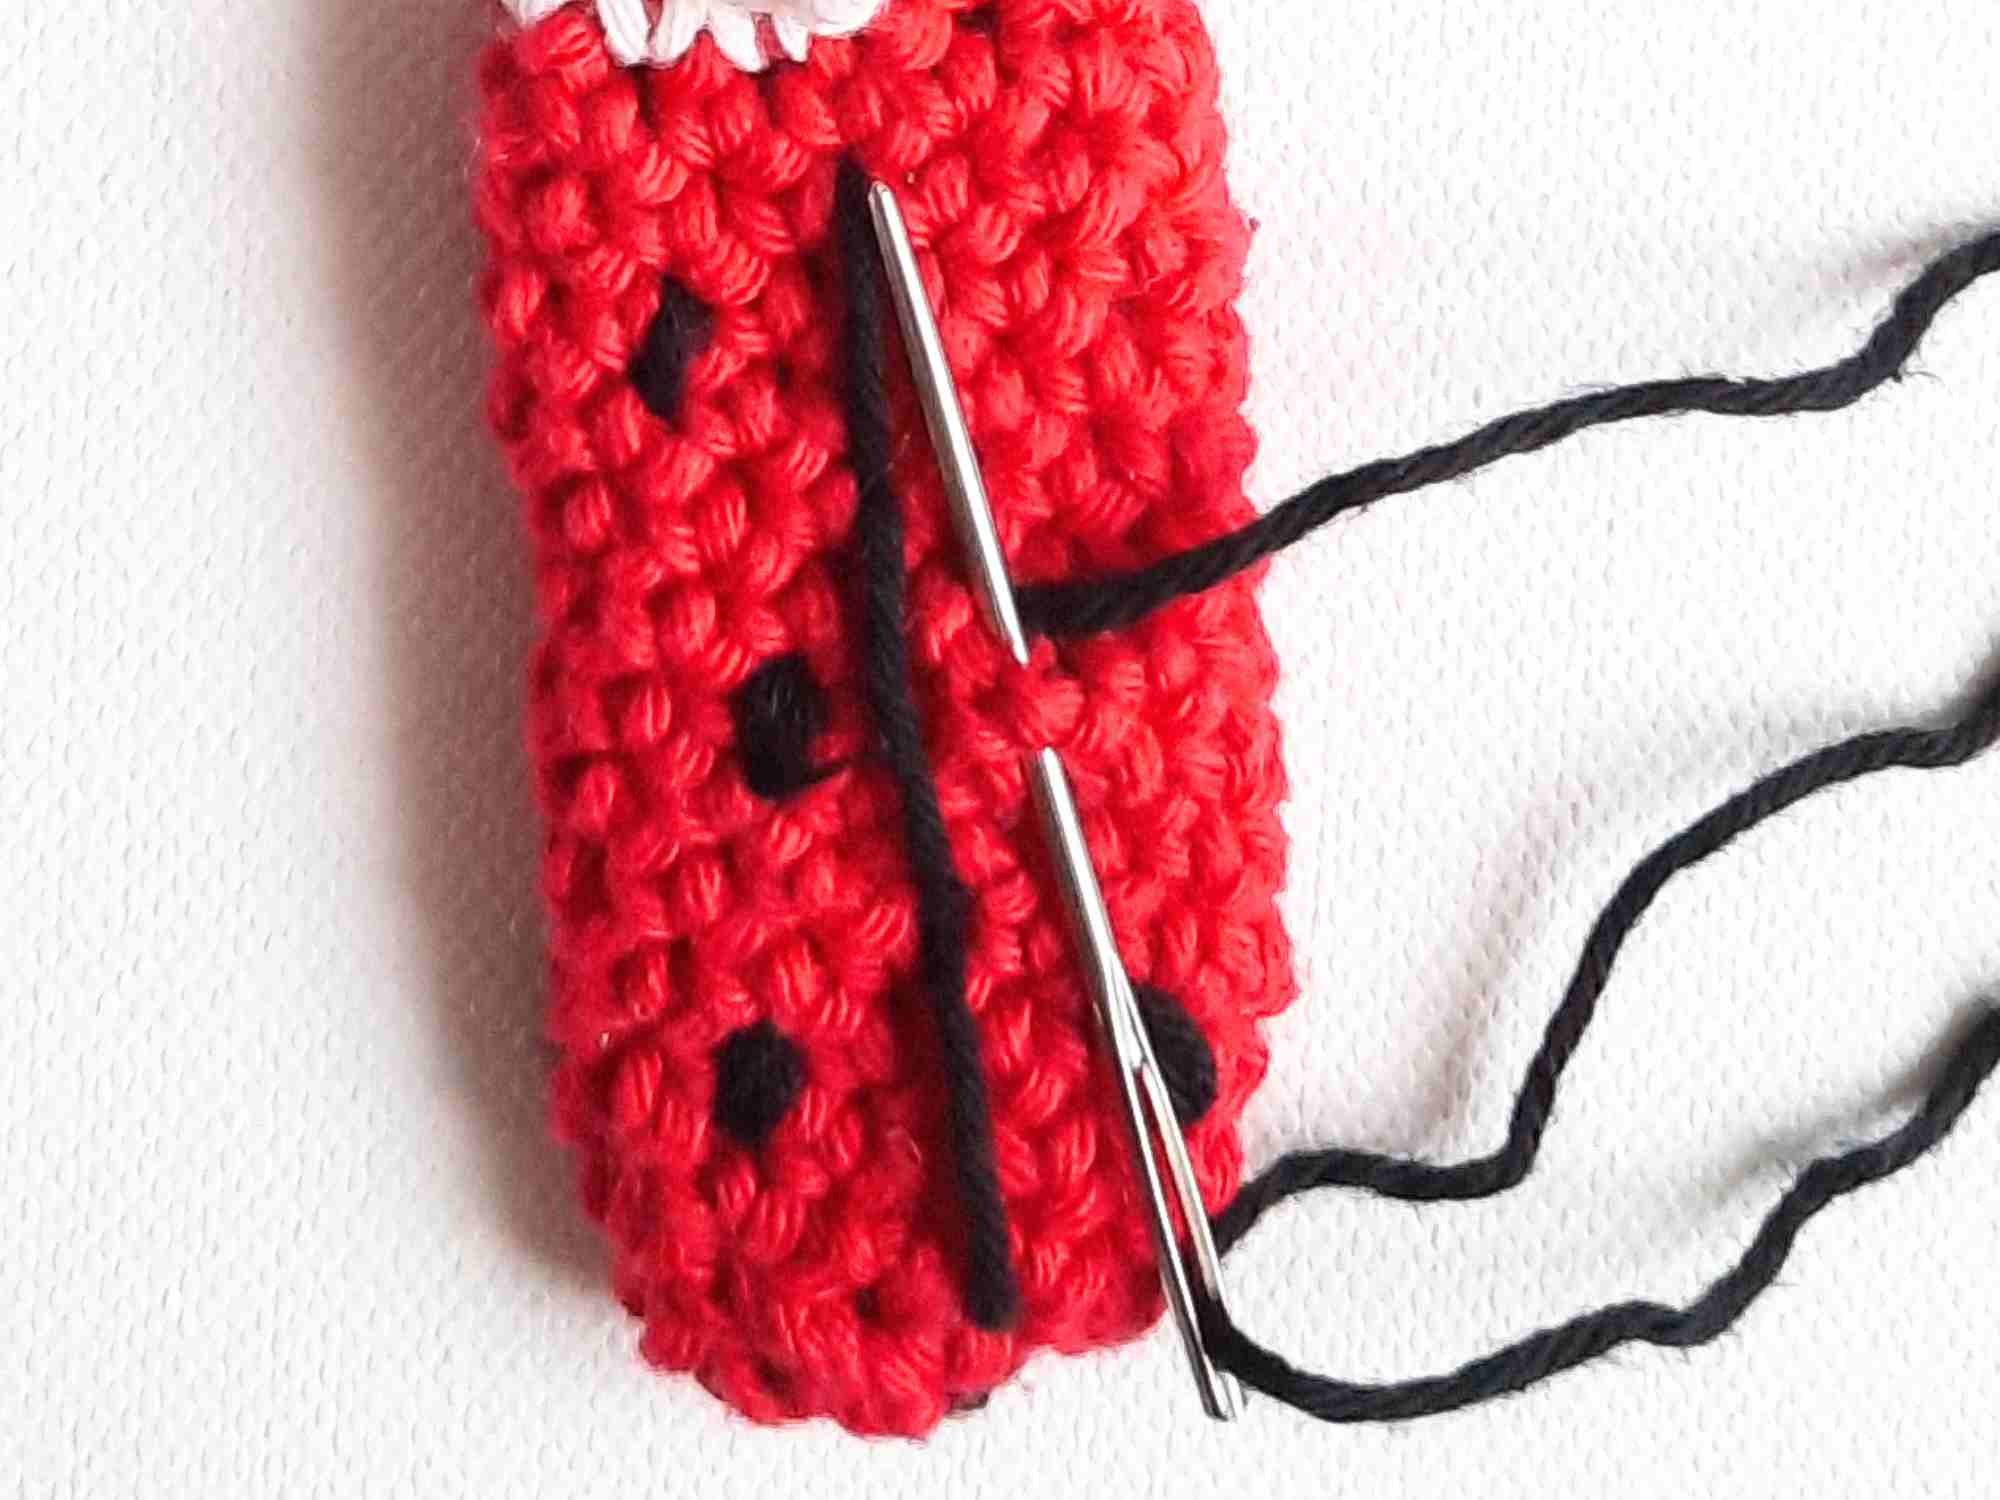 crochet ladybug pattern free